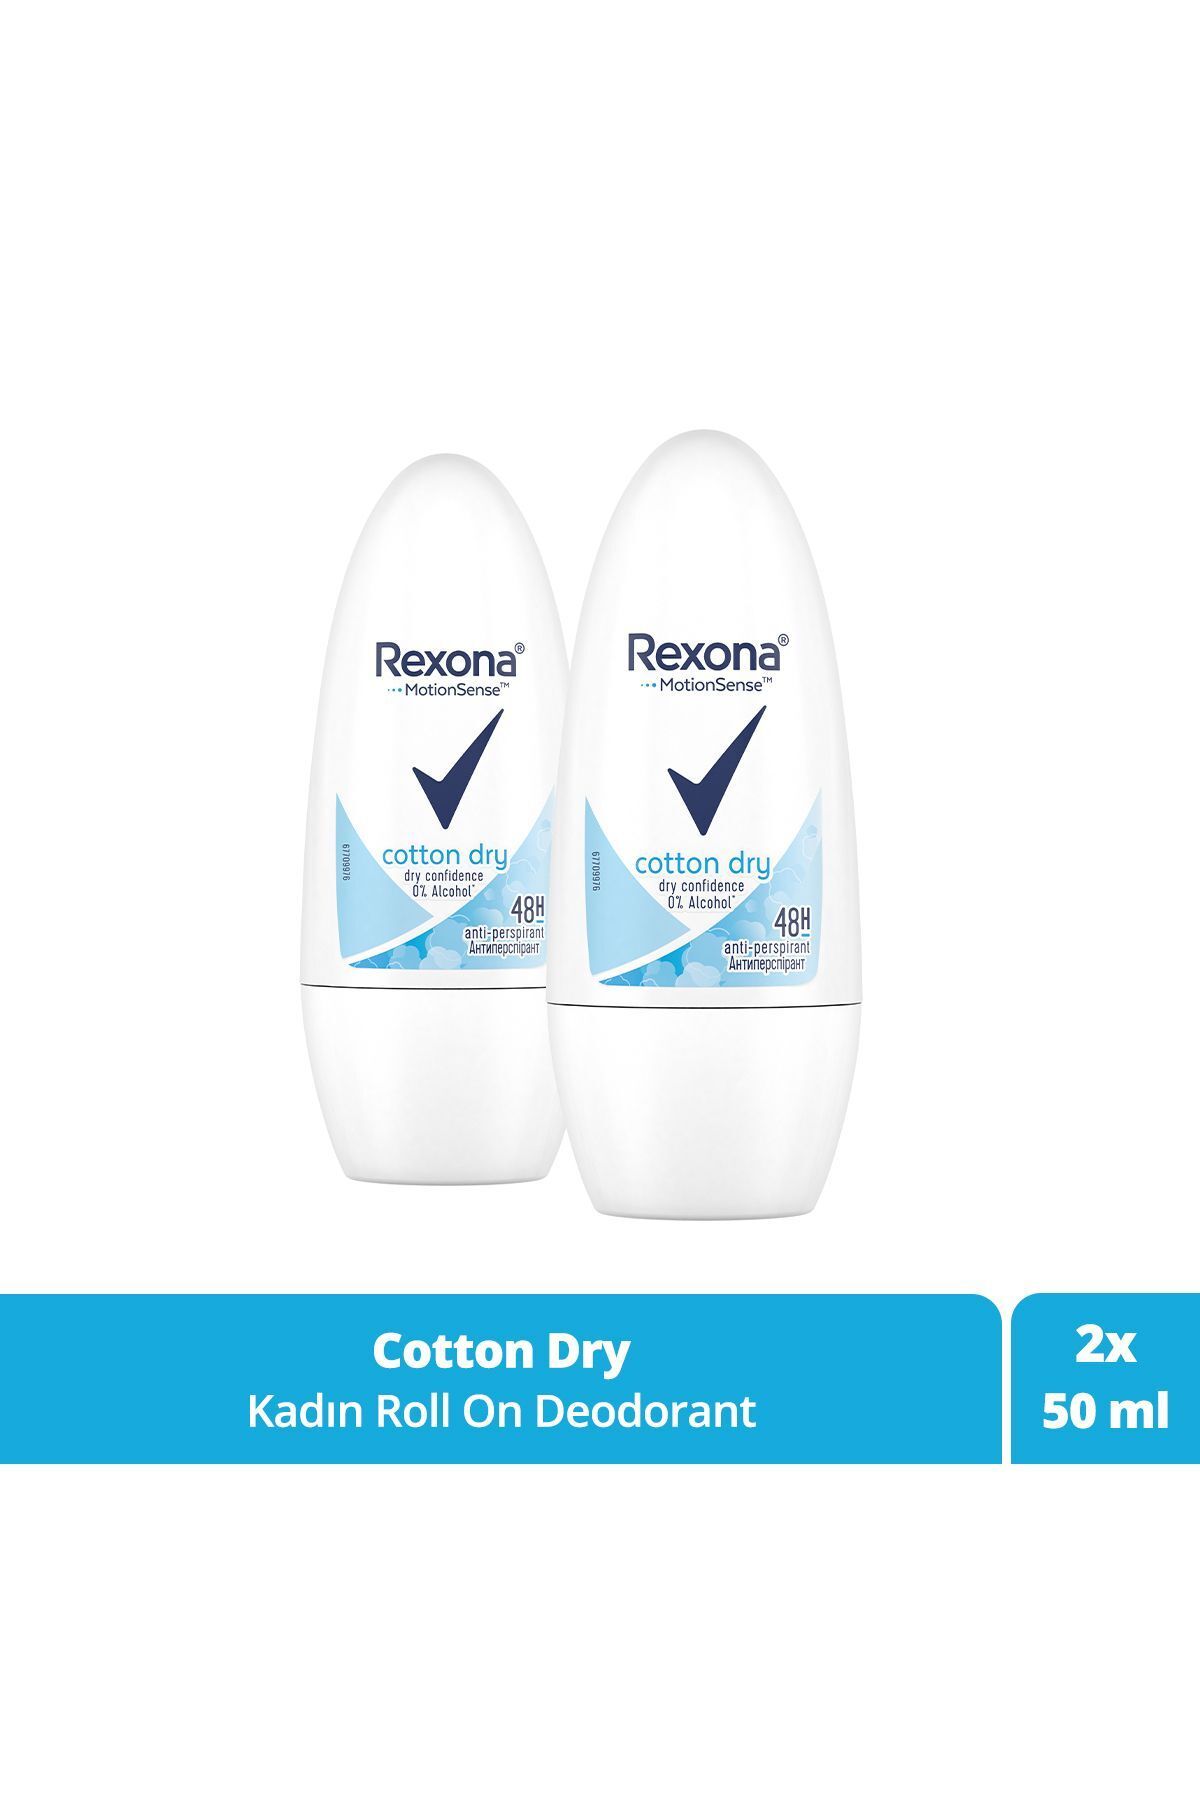 Rexona Motionsense Kadın Roll On Deodorant Cotton Dry 50 ml X2